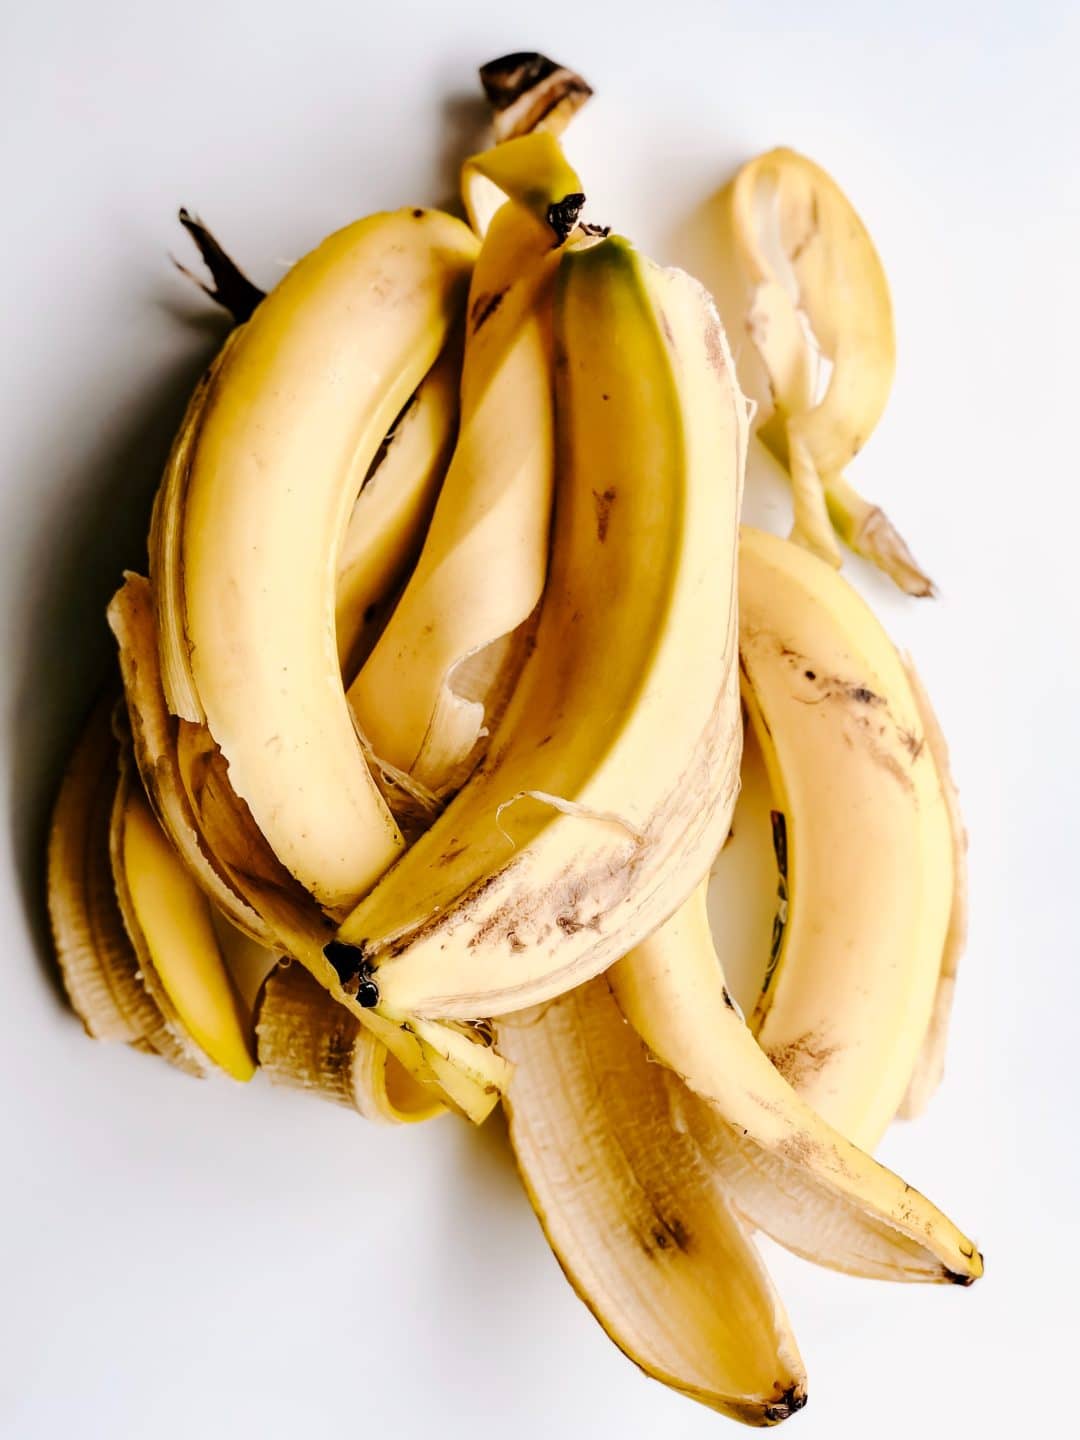 bananenschil als plantenvoeding